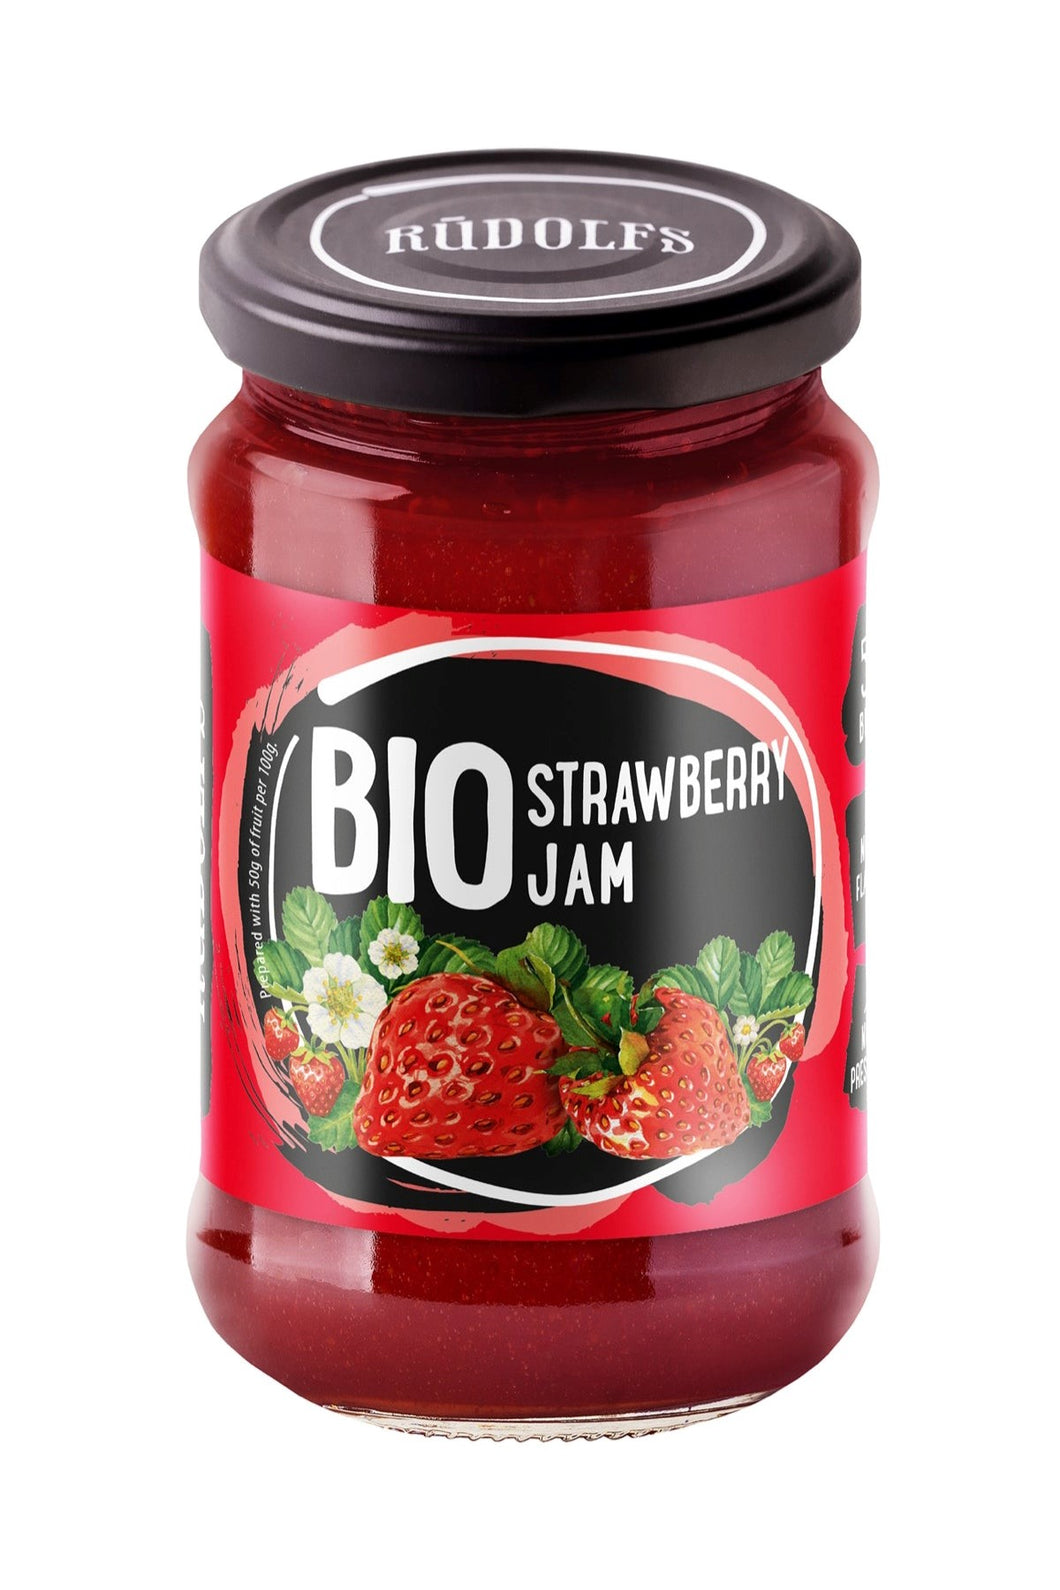 Rudolfs - Organic Jams - Strawberry (50% Fruit) (GF) 400g 6 x 400g